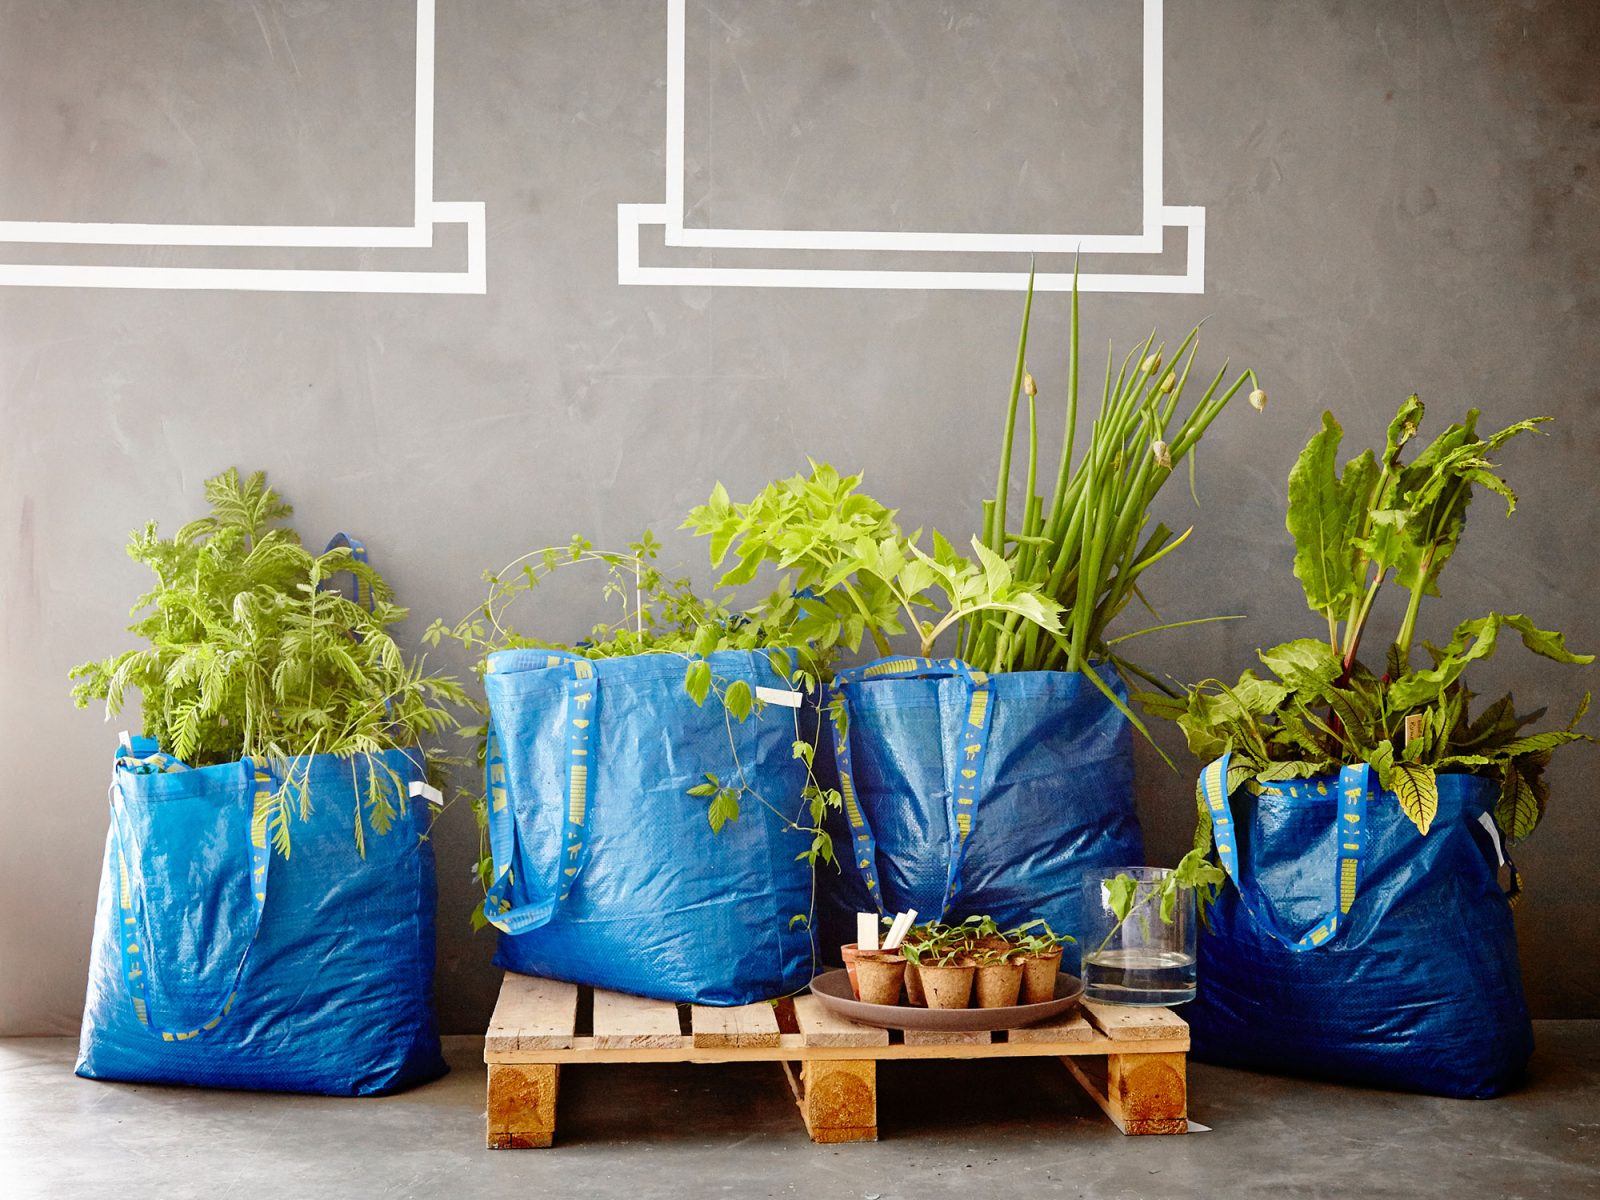 Una hilera de grandes bolsas azules FRAKTA usadas como macetas para frondosas plantas verdes.